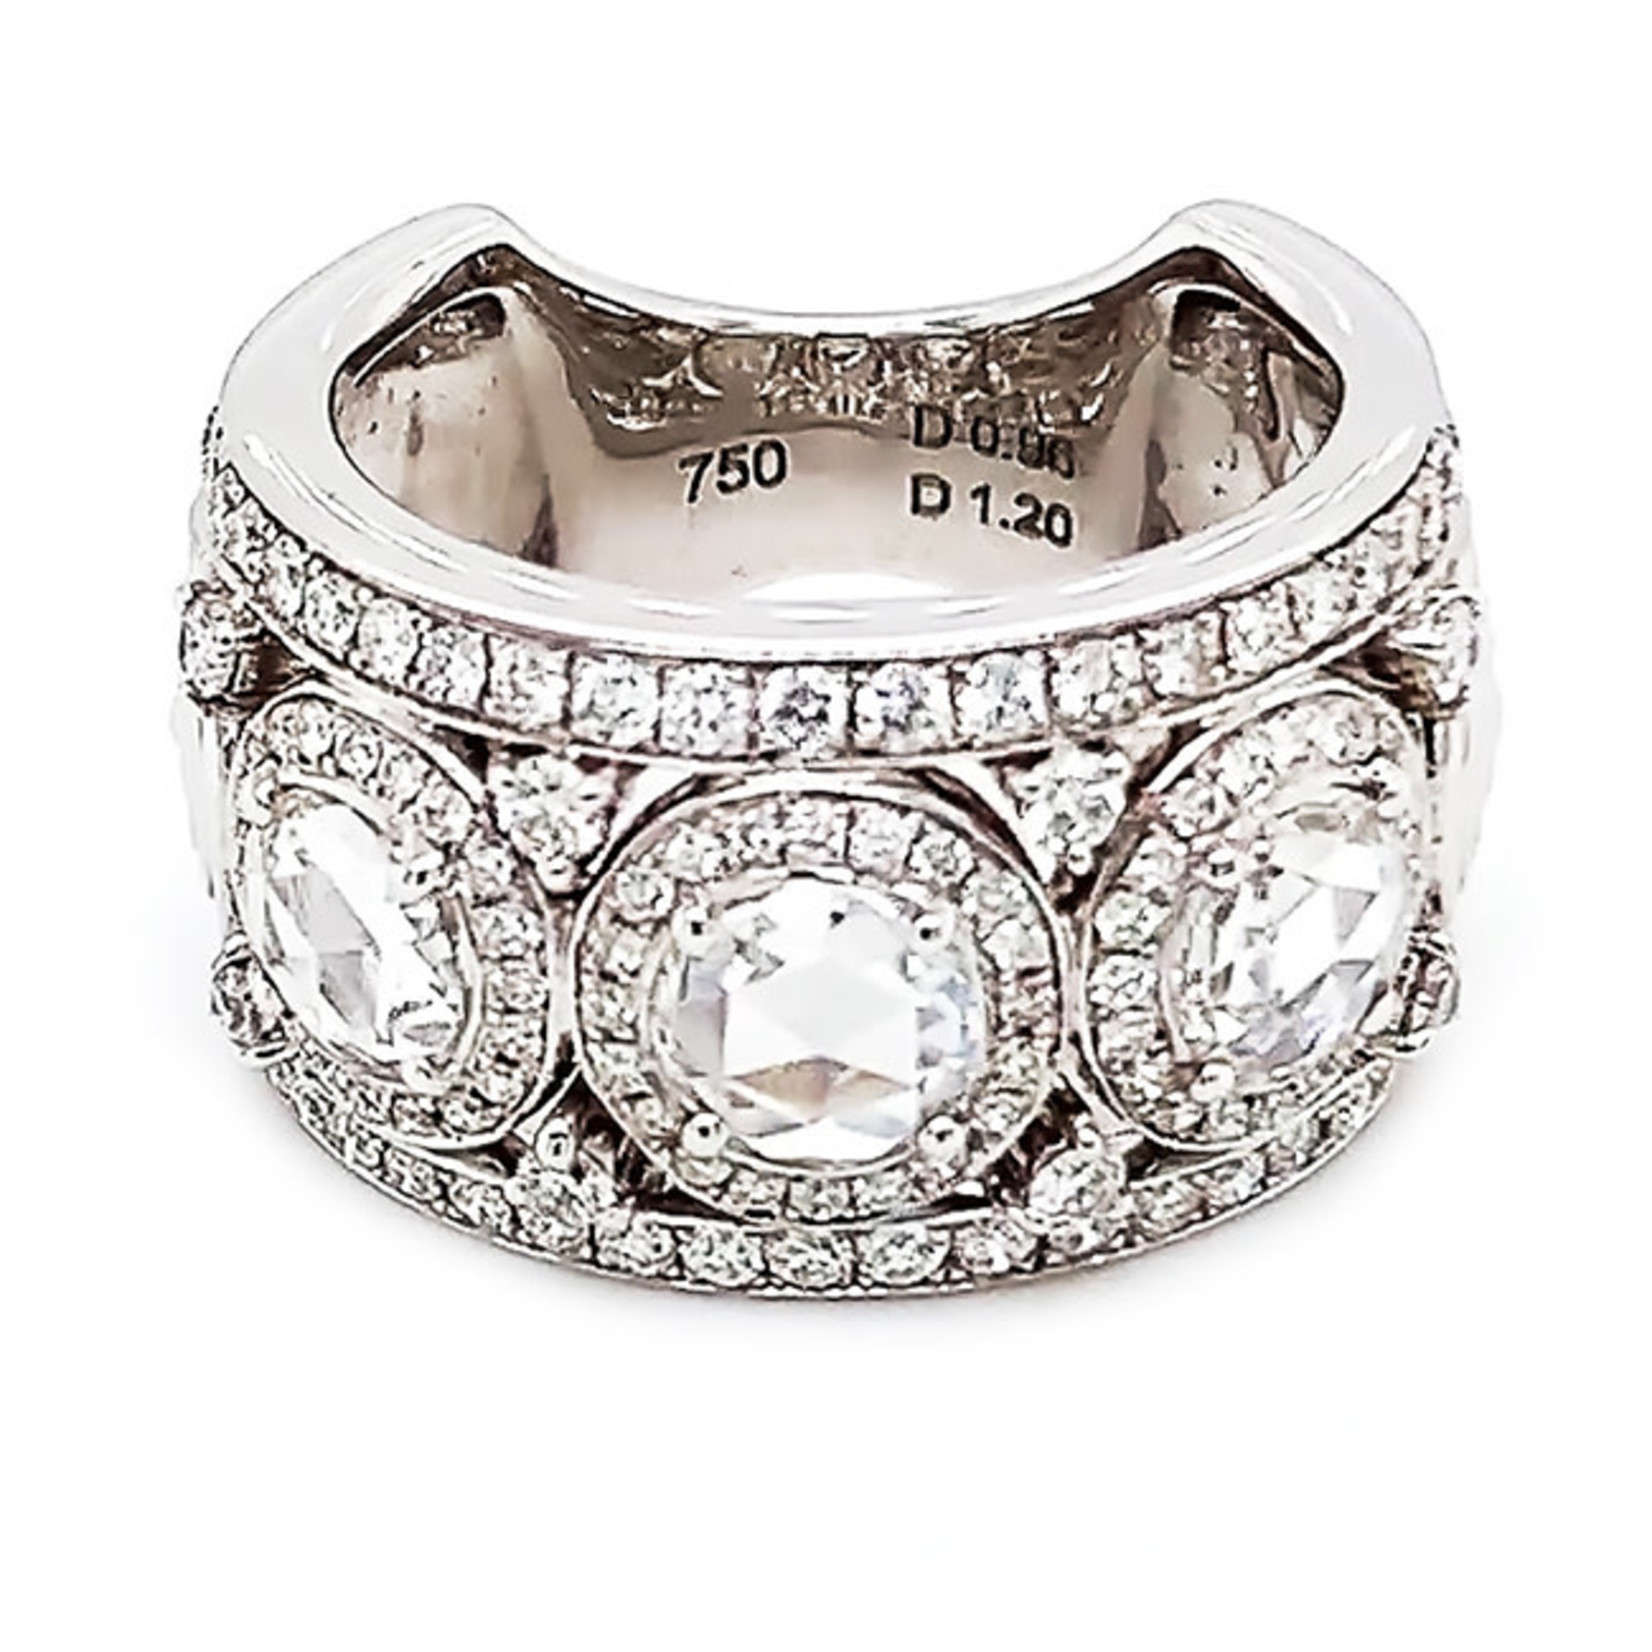 Jewelry By Danuta - Gold Drawer Rose-Cut Diamond 18kt. White Gold Band Sold